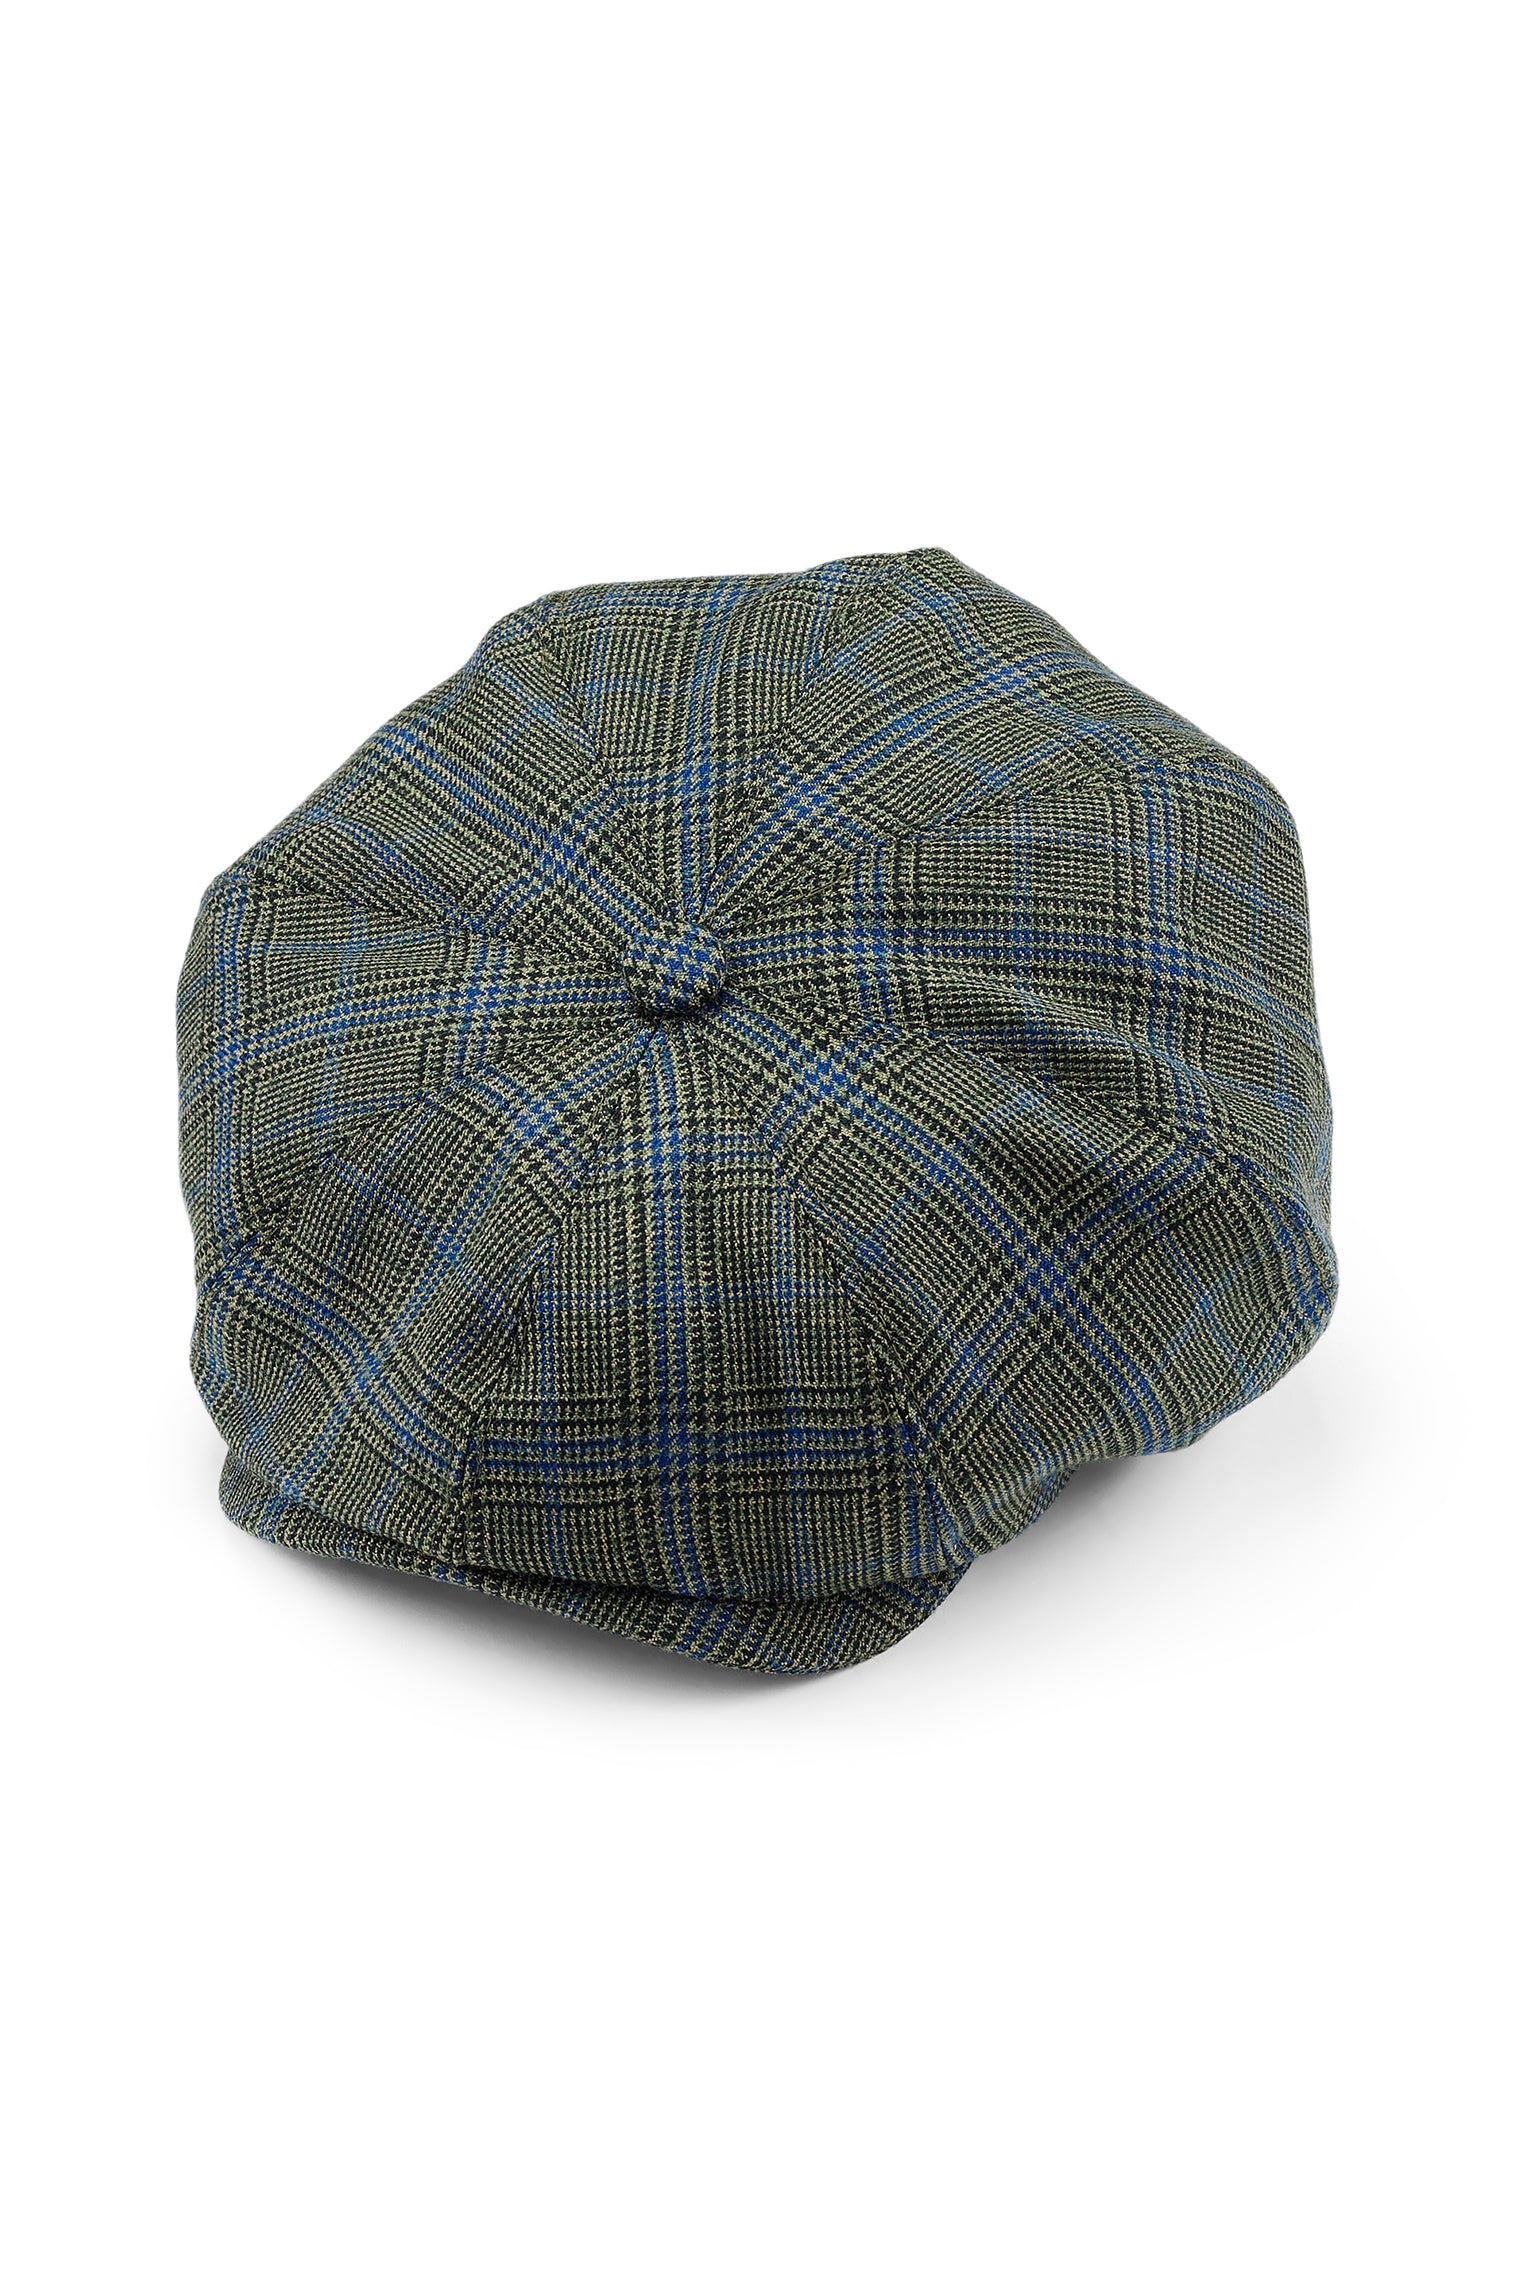 Highgrove Green Bakerboy Cap - Men's Hats - Lock & Co. Hatters London UK